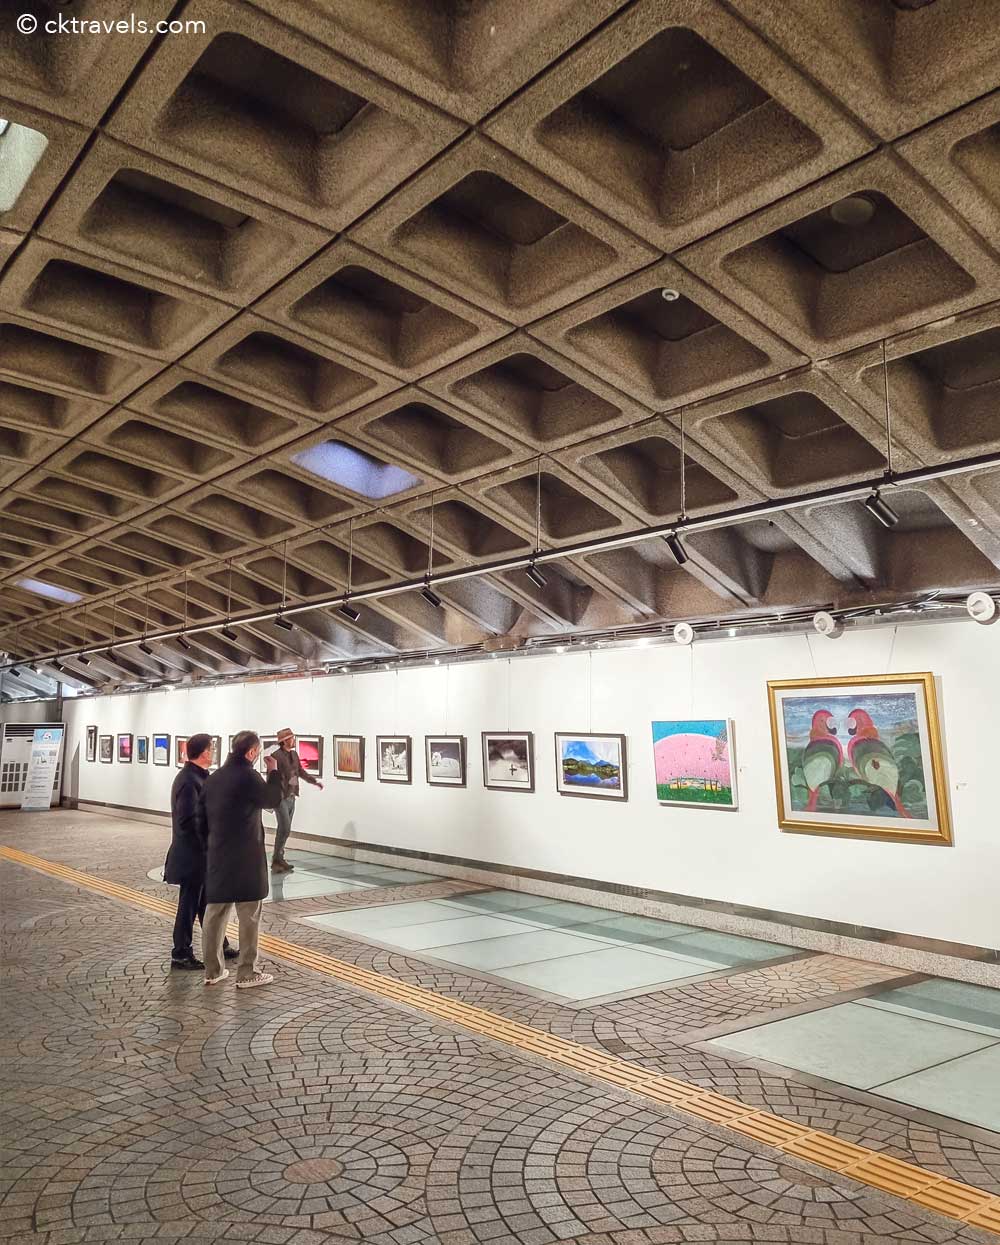 Seoul Metro Art Center